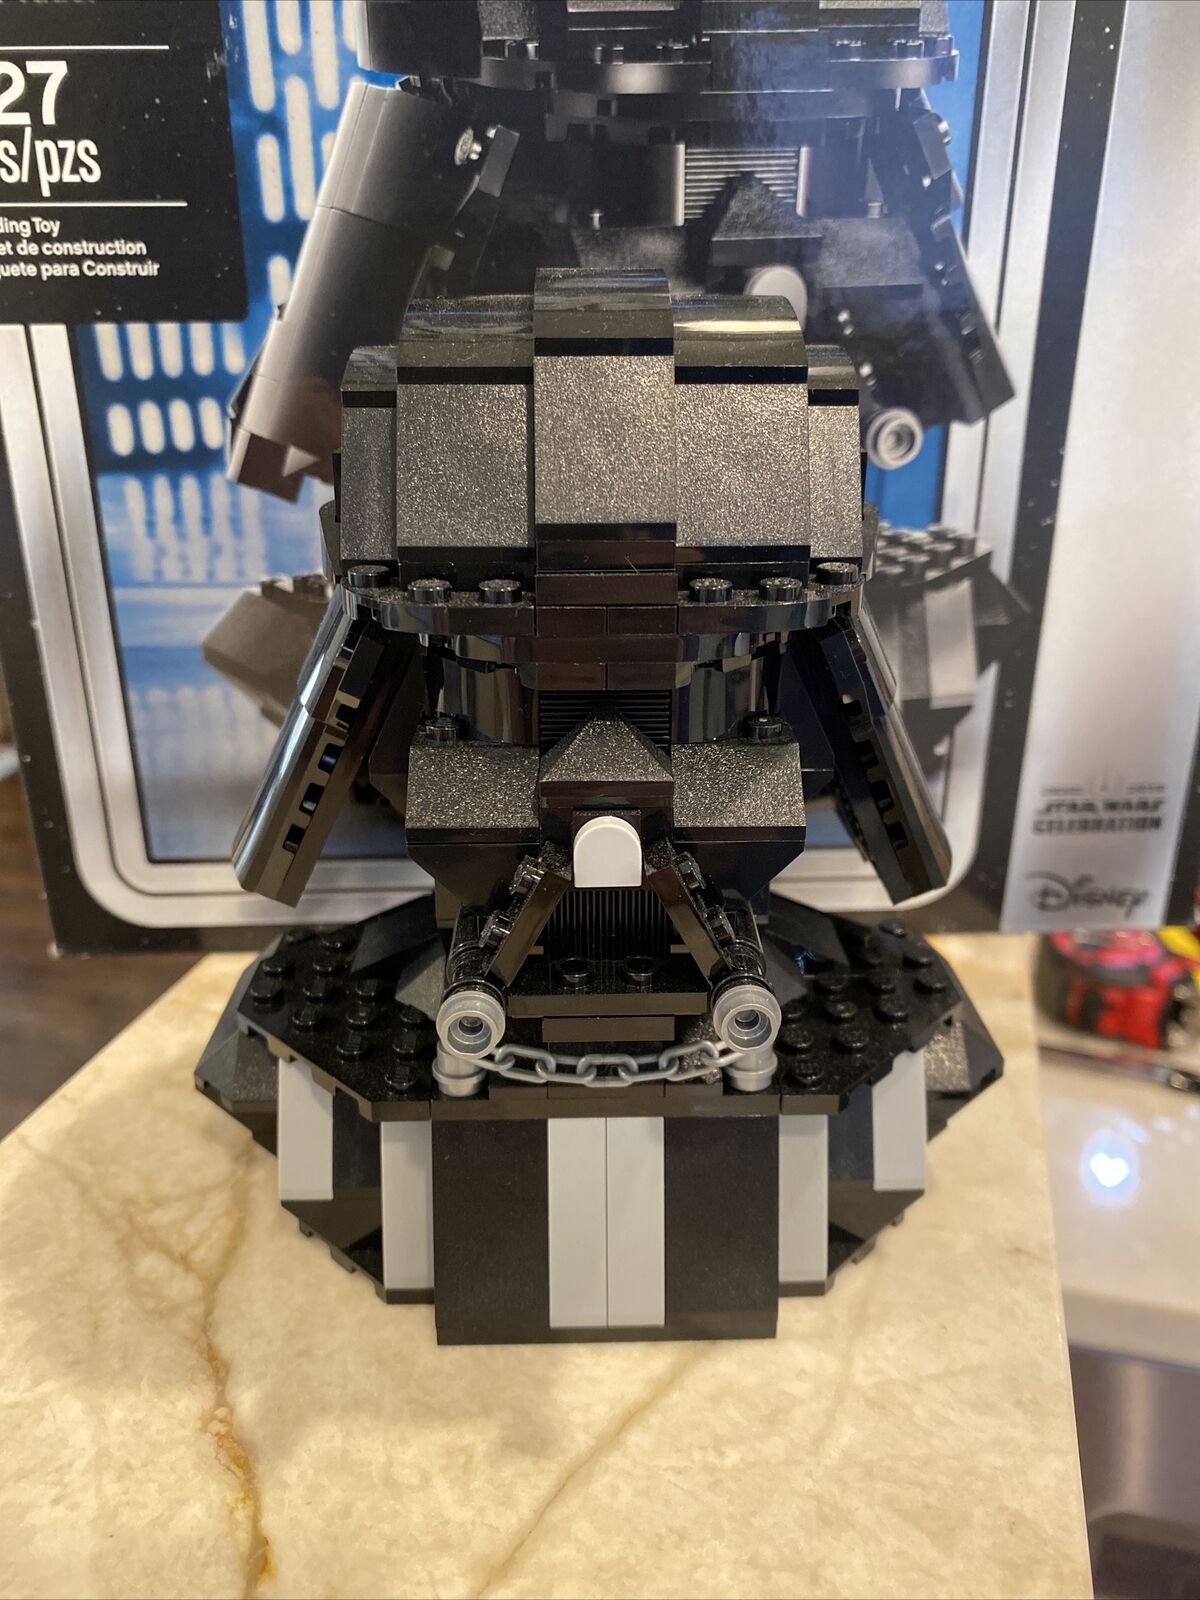 327 Pieces for sale online 75227 LEGO Star Wars Darth Vader Bust